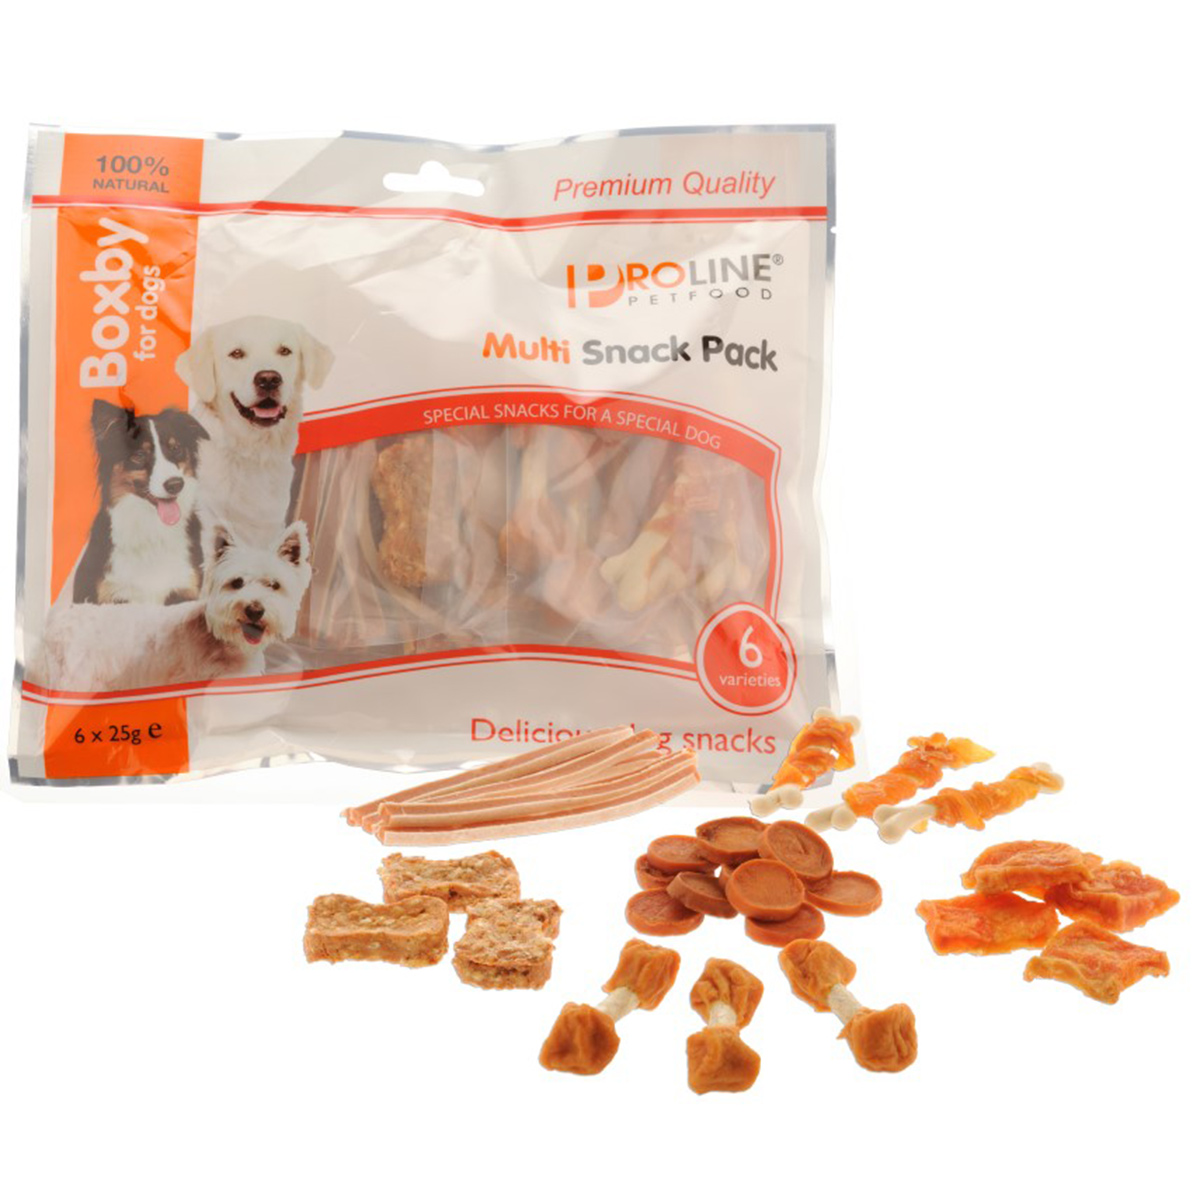 Proline Dog Pachet Multi Snack 6 x 25 g petmart.ro